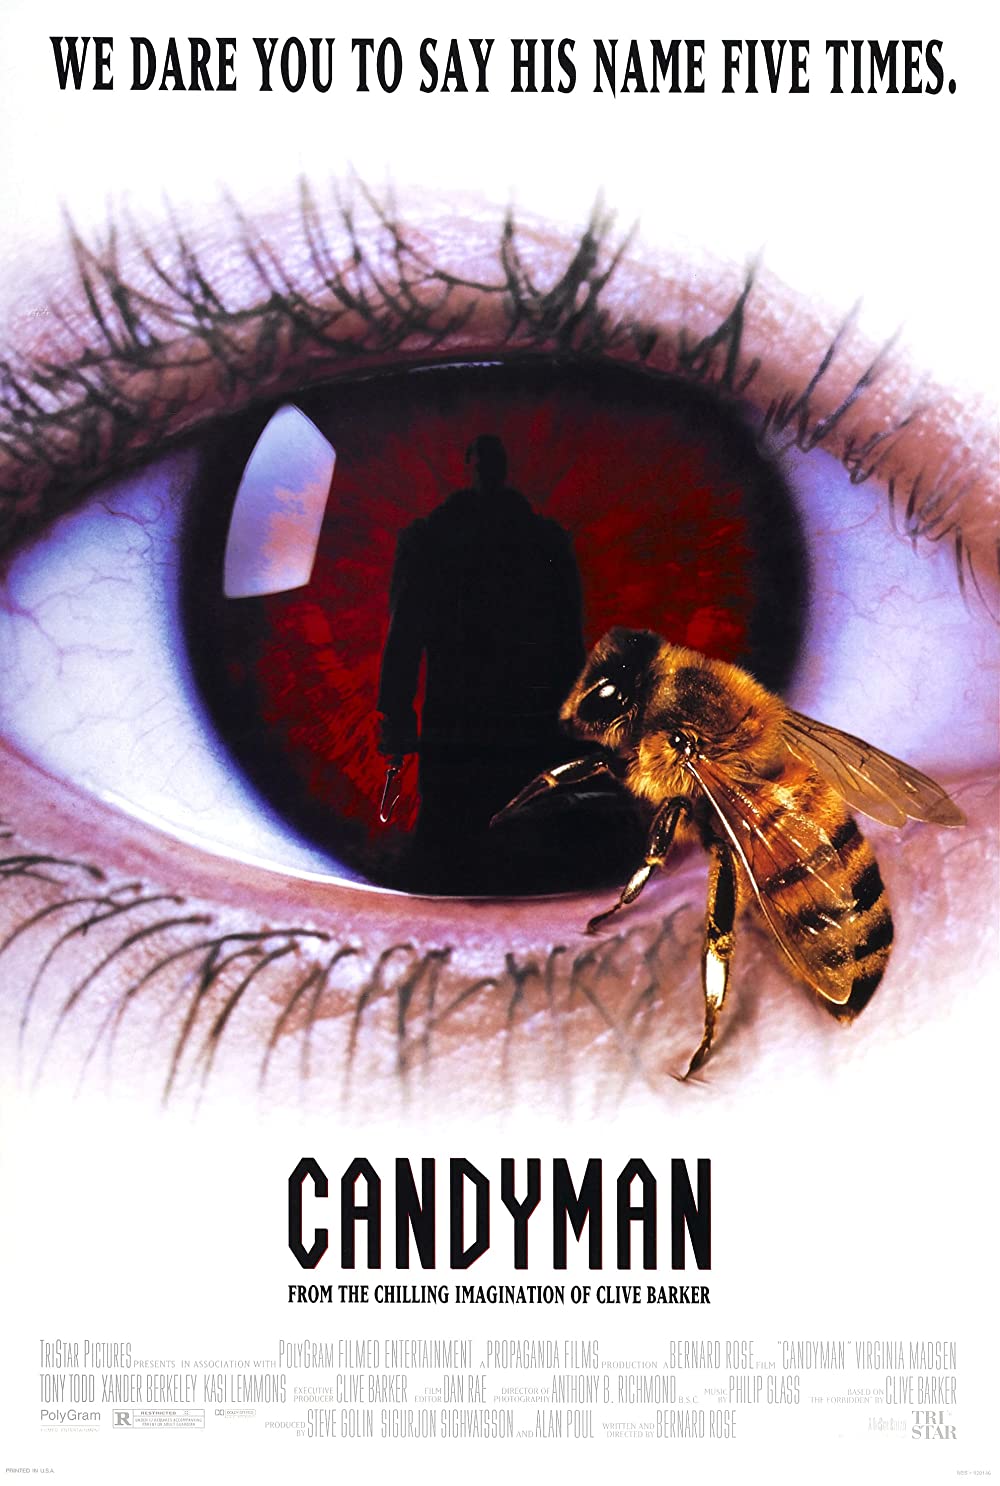 Filmbeschreibung zu Candyman